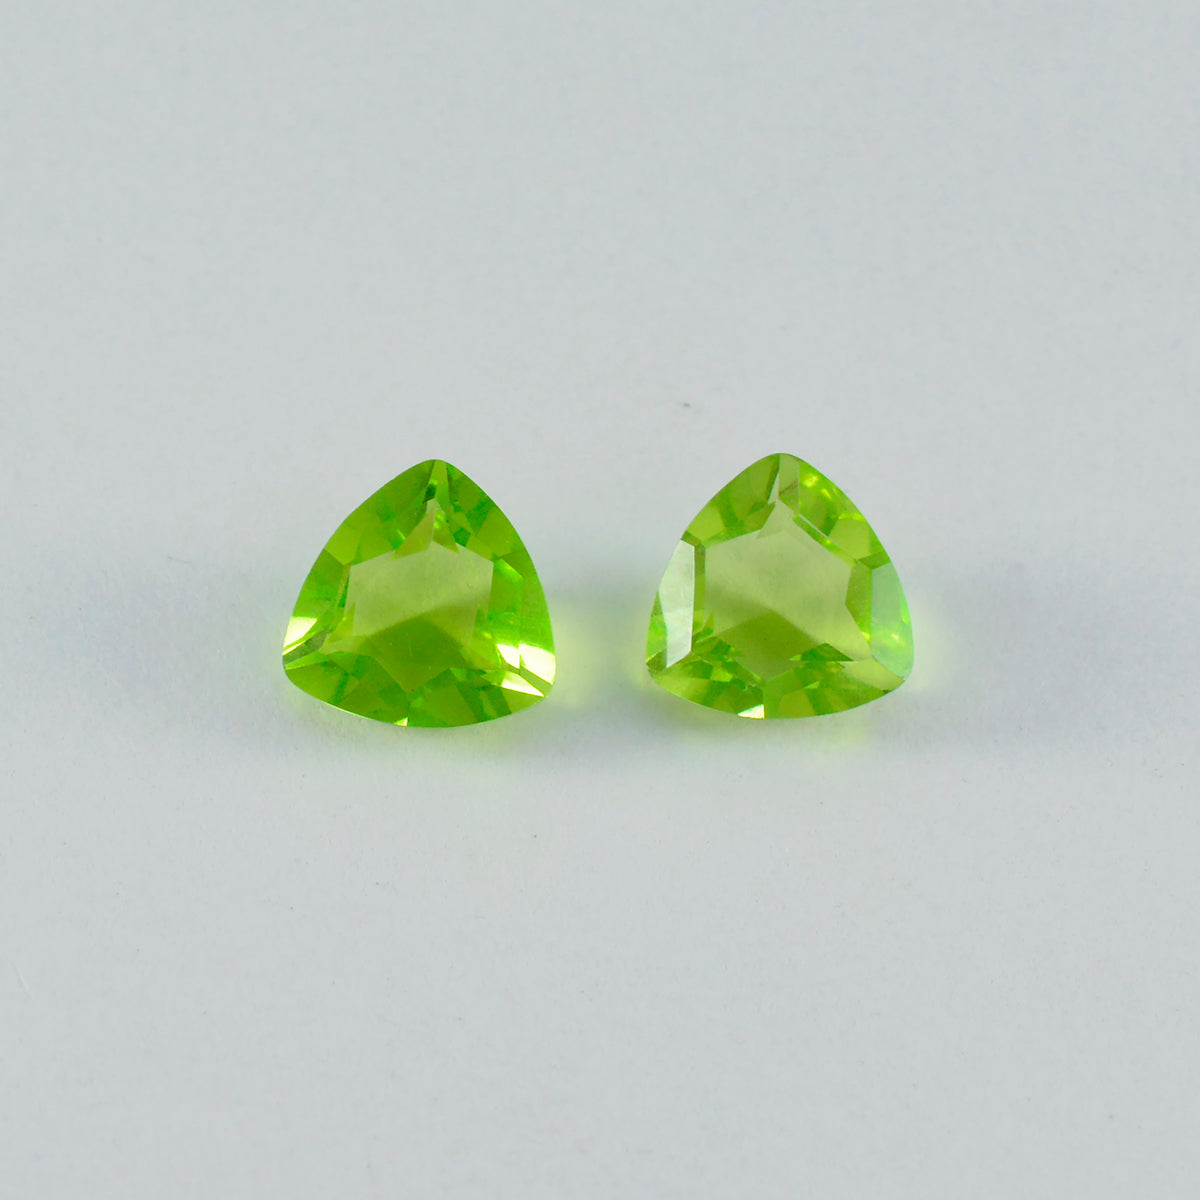 Riyogems 1PC Green Peridot CZ Faceted 12x12 mm Trillion Shape A+1 Quality Gem